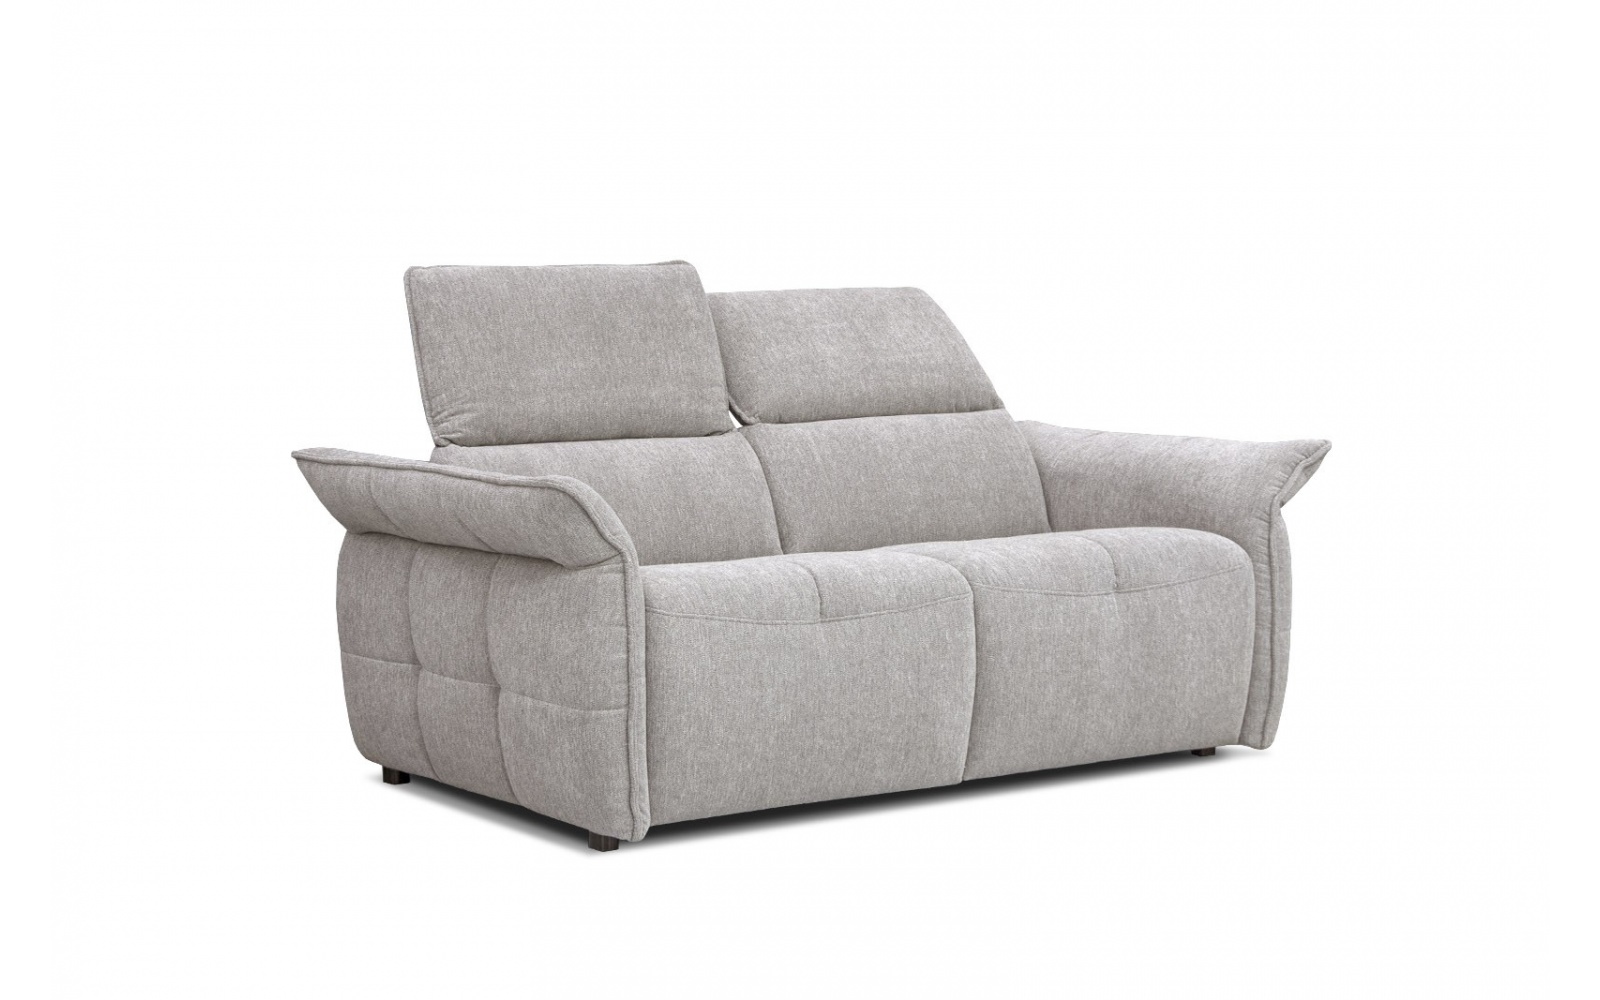 lucas innerspring sofa bed review